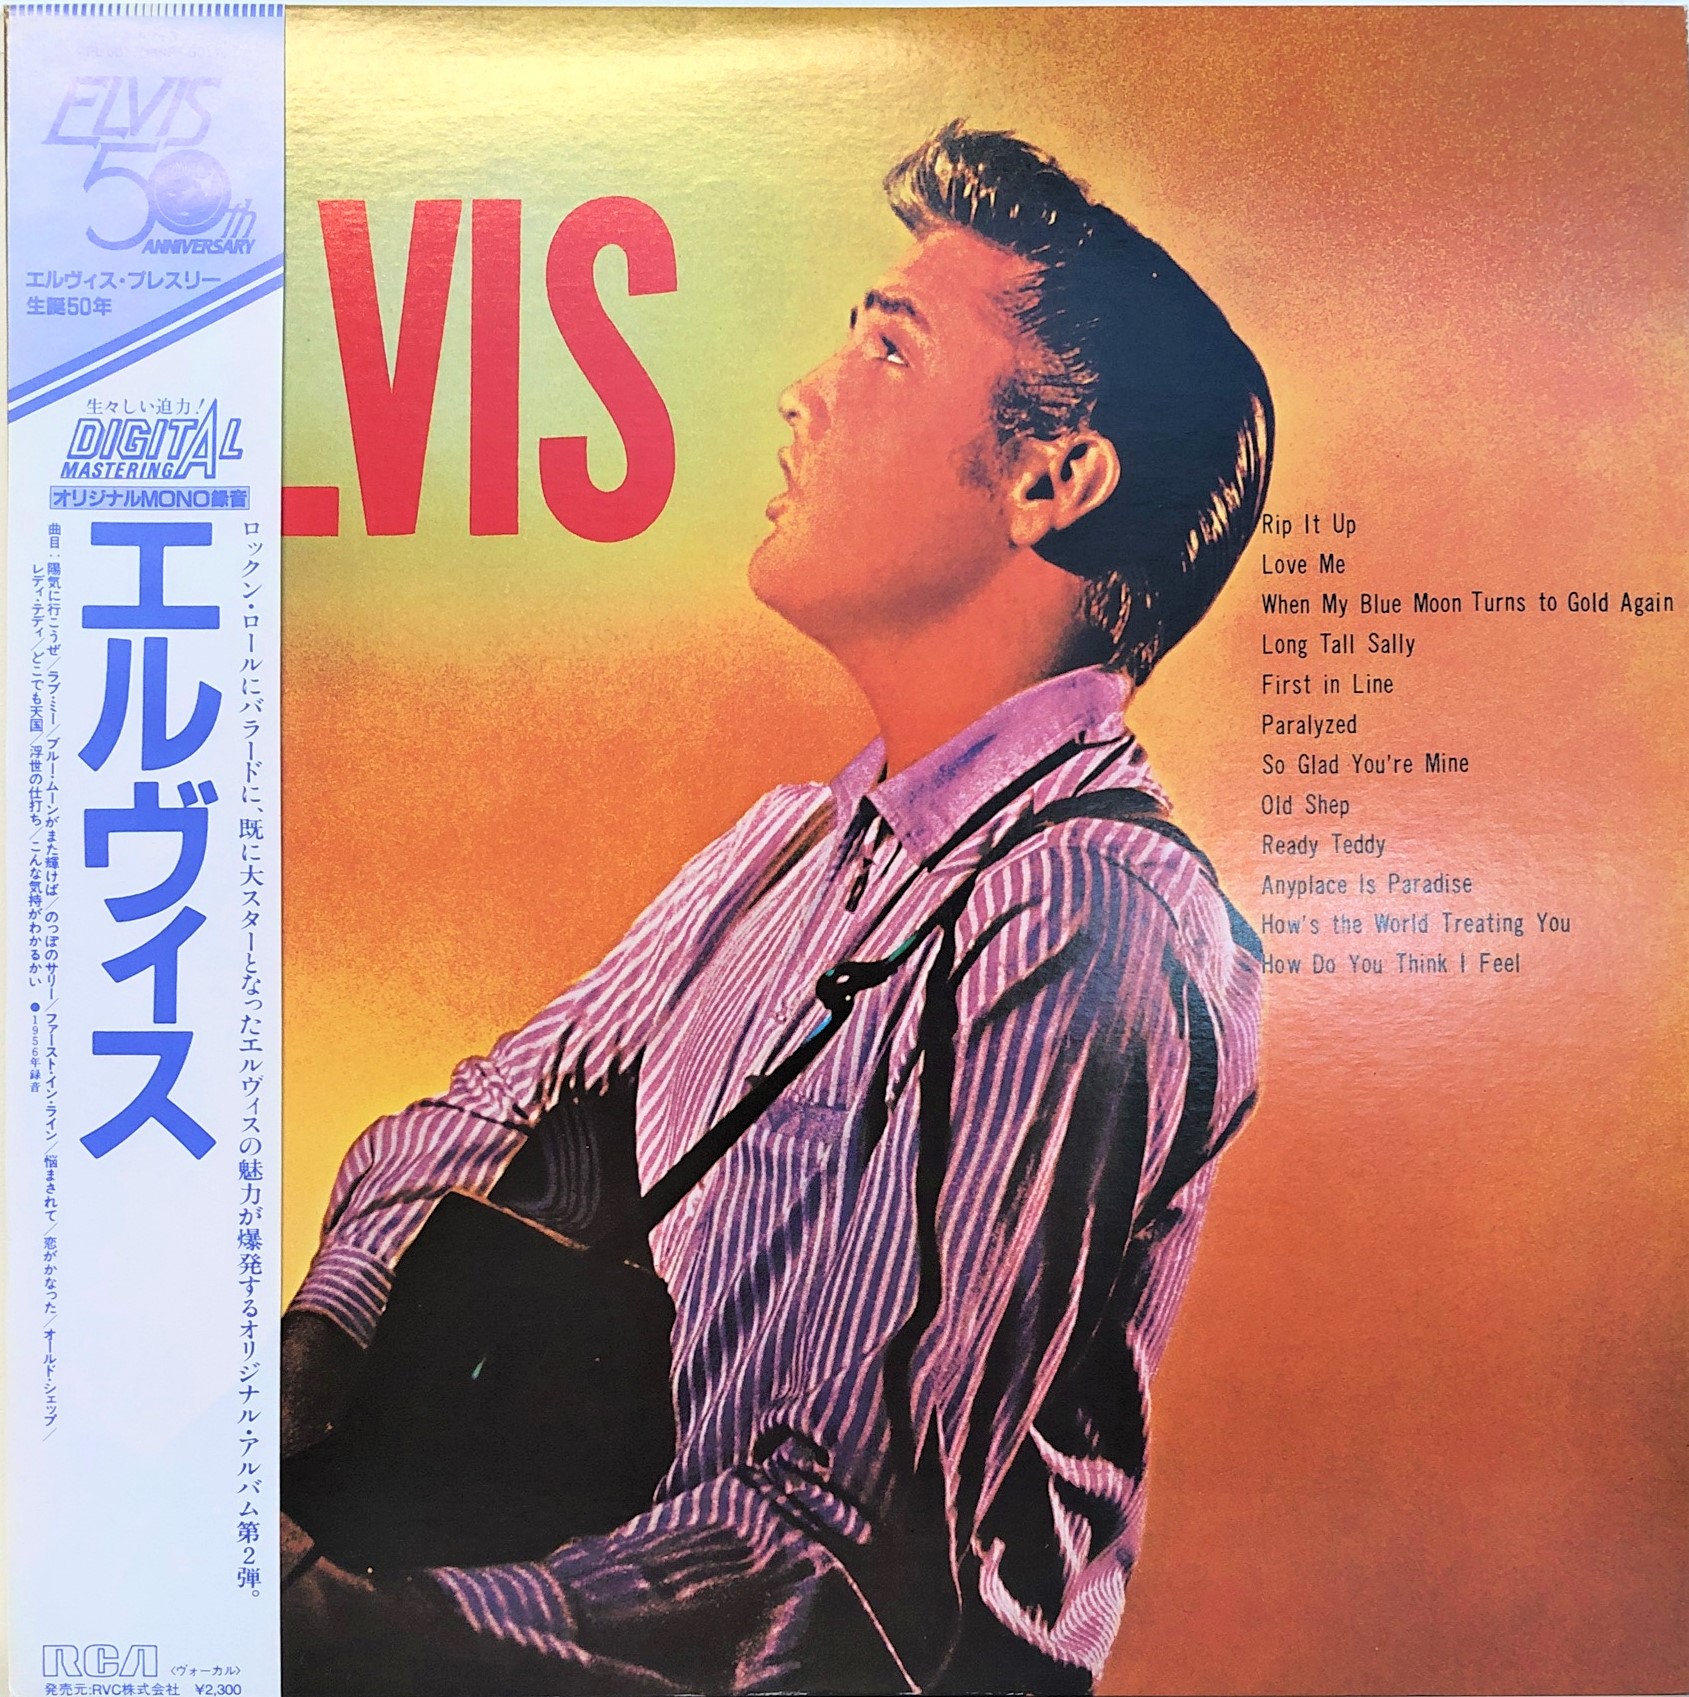 Elvis Presley ‎– Elvis | 中古レコード通販・買取のアカル・レコーズ